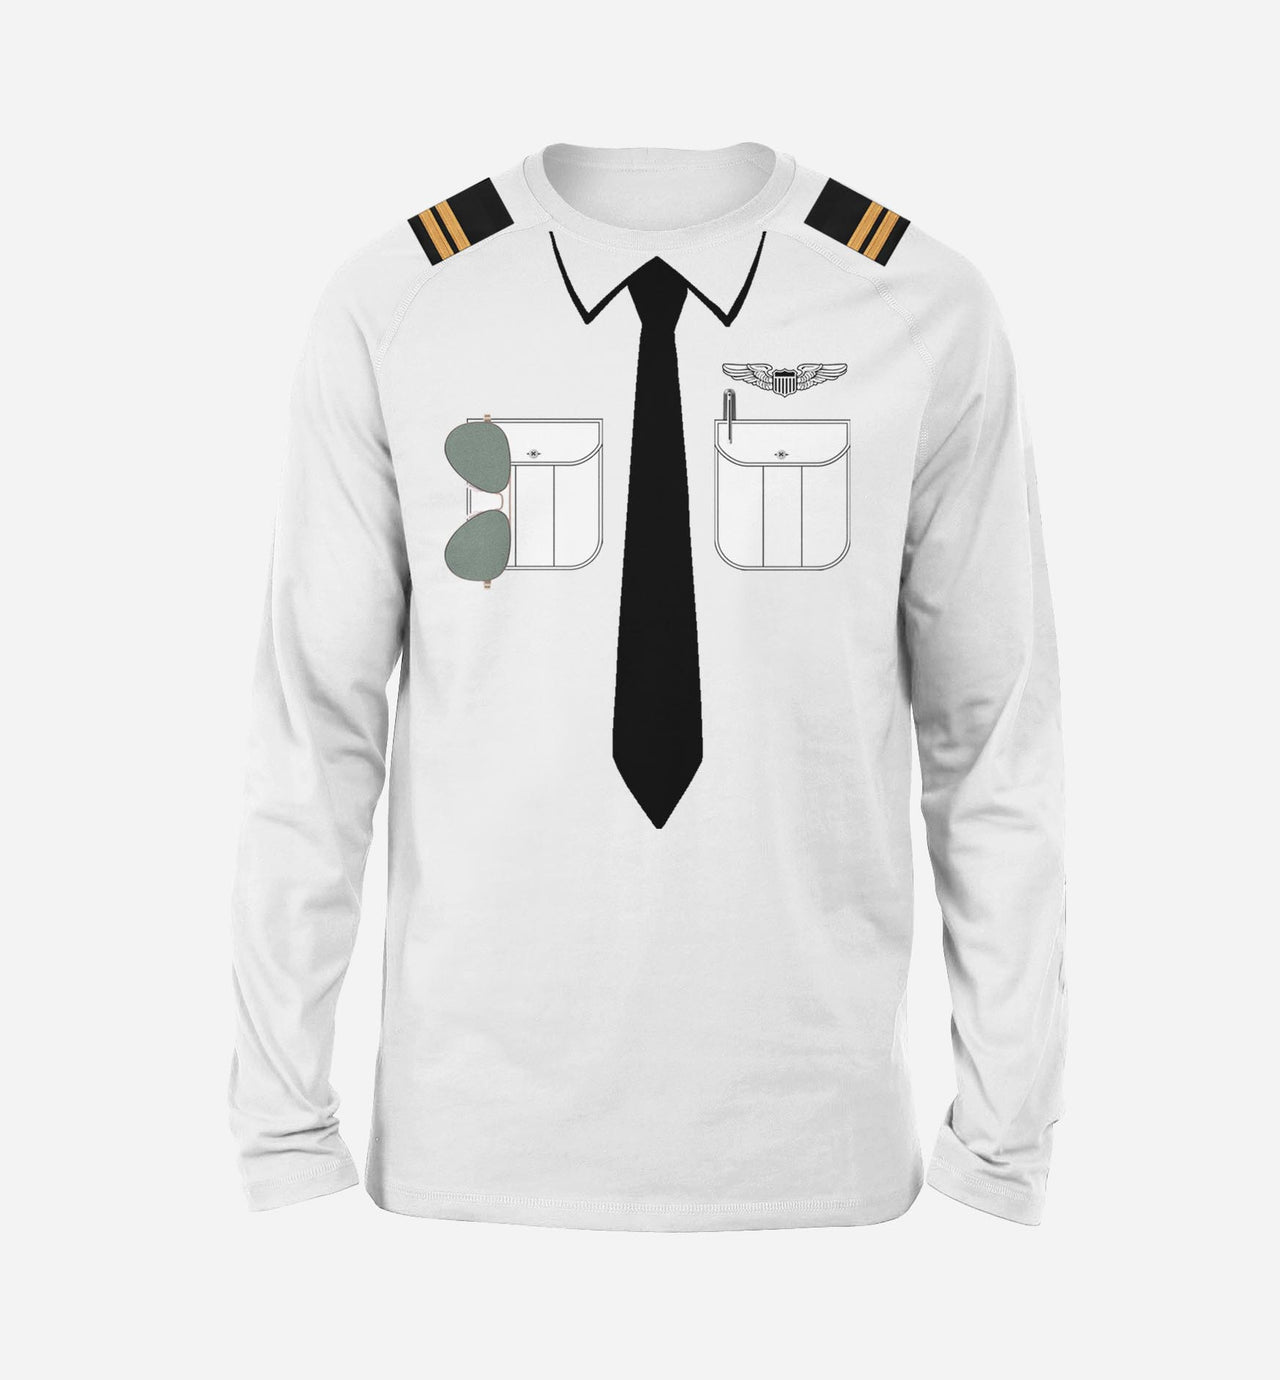 Customizable Pilot Uniform (Badge 1) Designed "Long Sleeve" T-Shirts